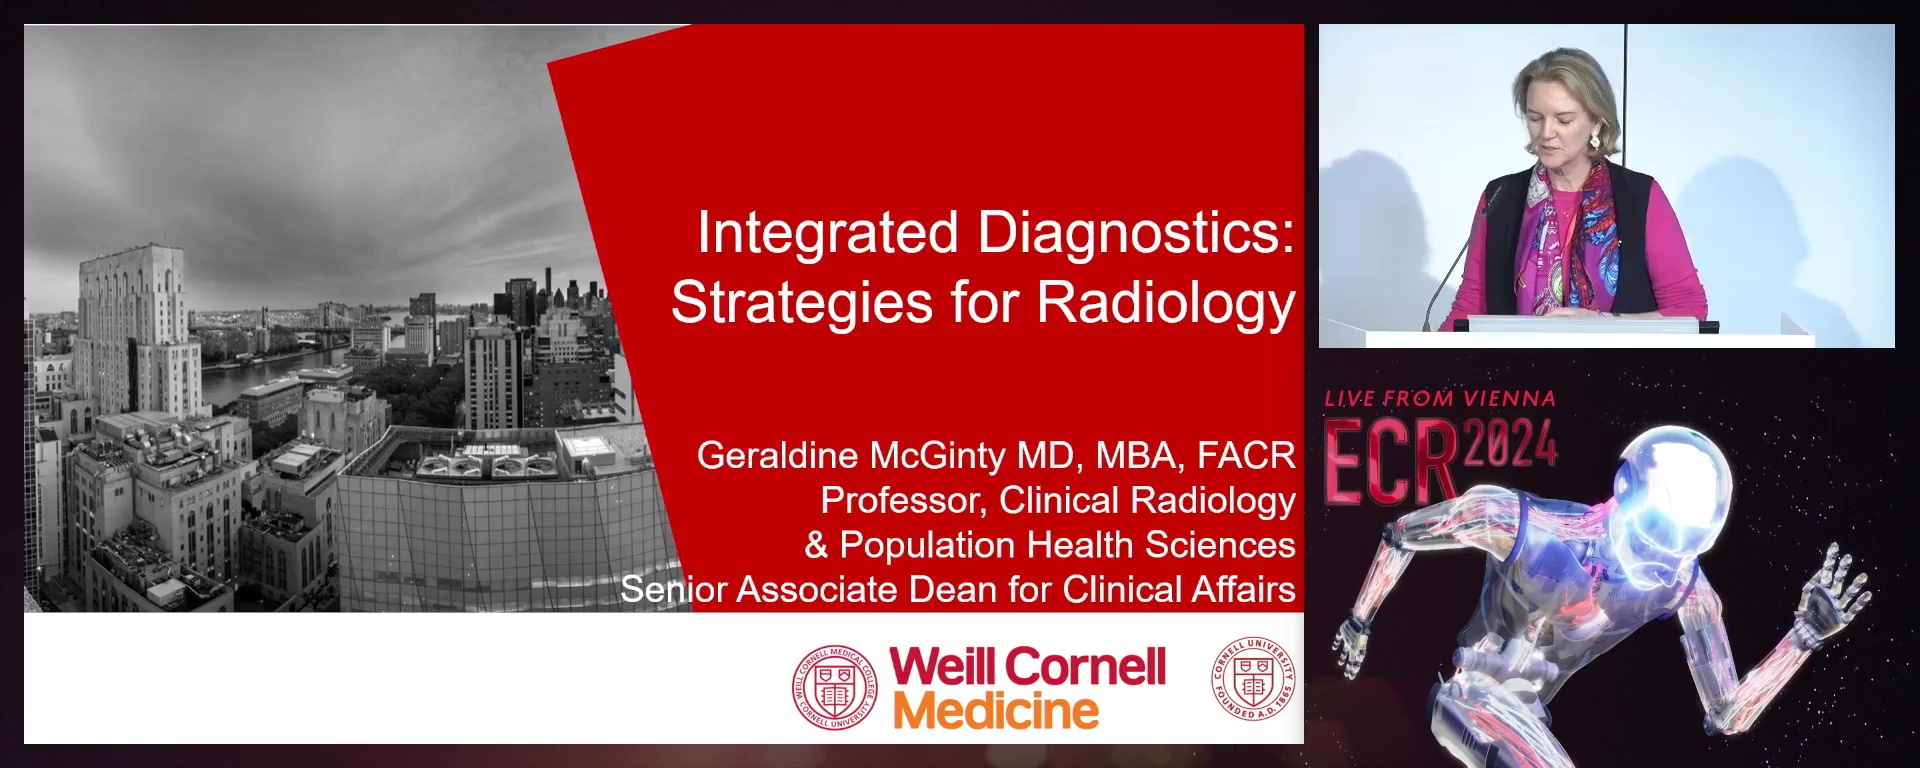 Integrated diagnostics: strategies for radiology